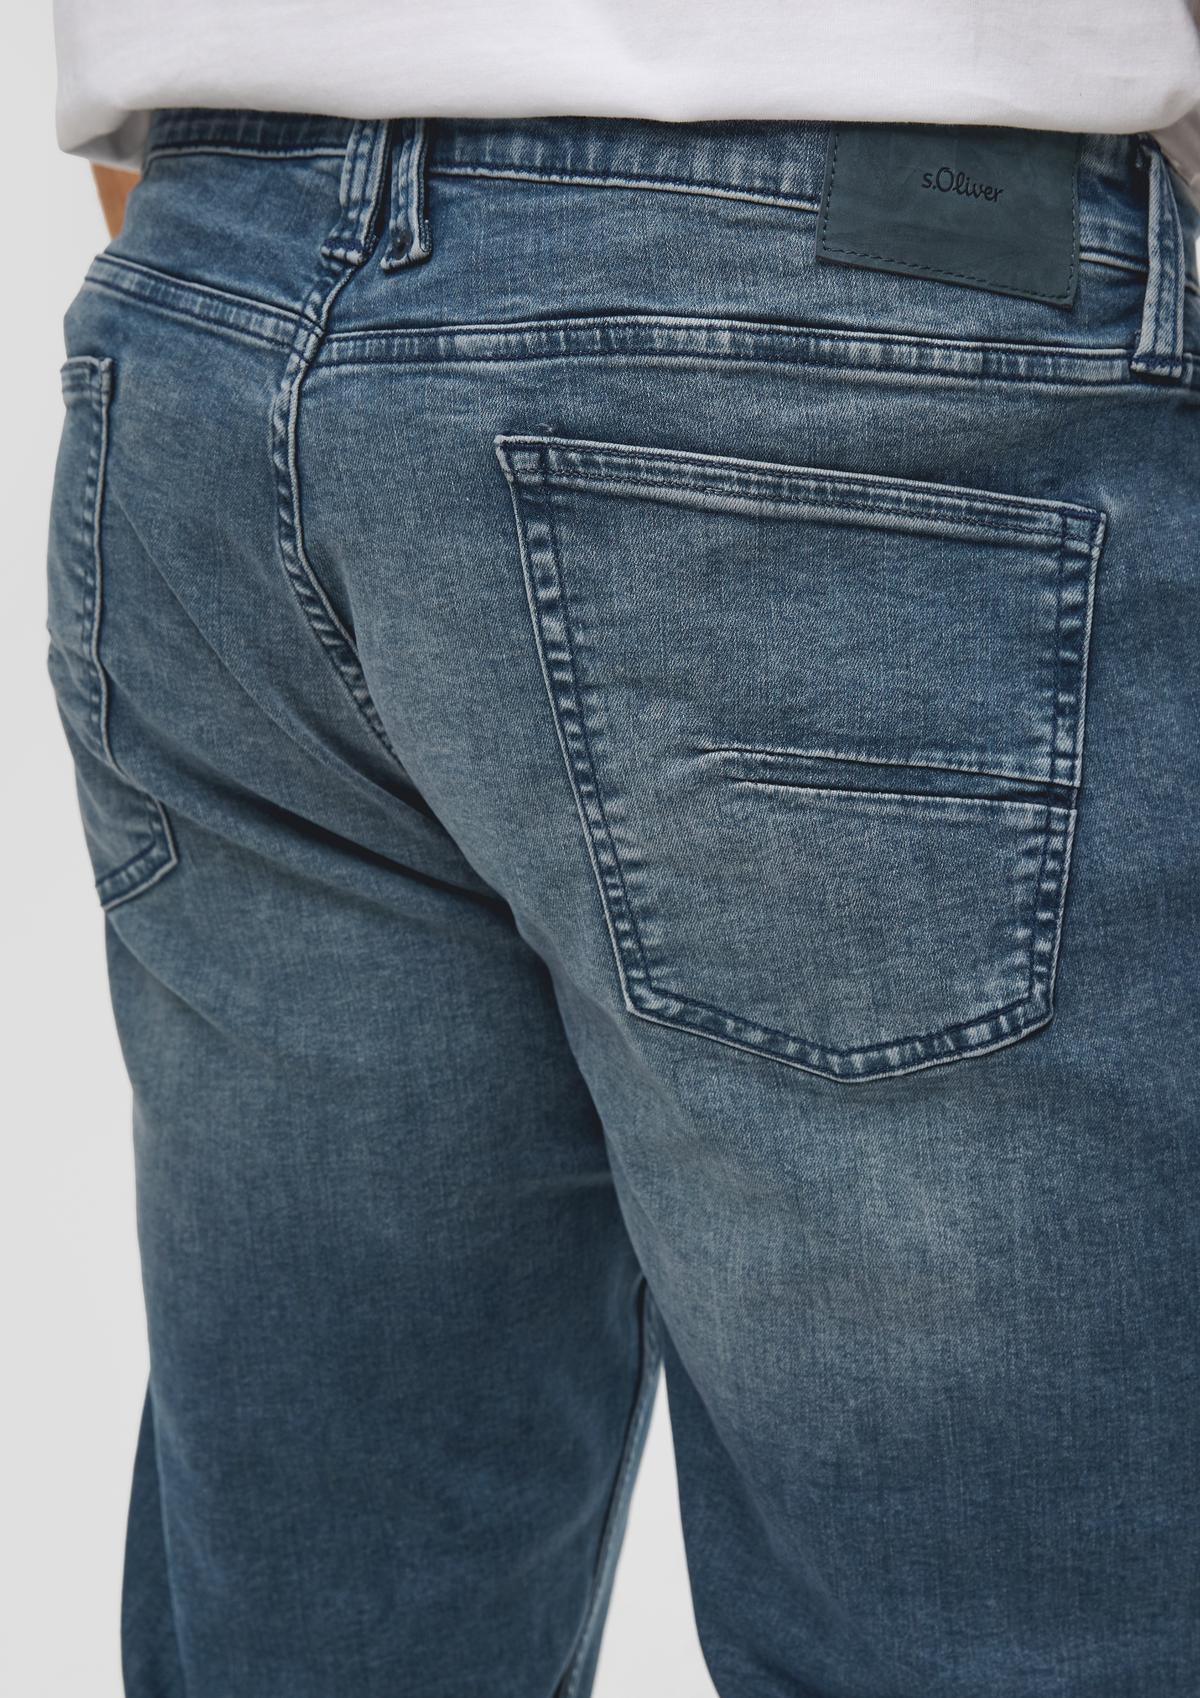 York jeans / regular fit / mid rise / regular leg - blue